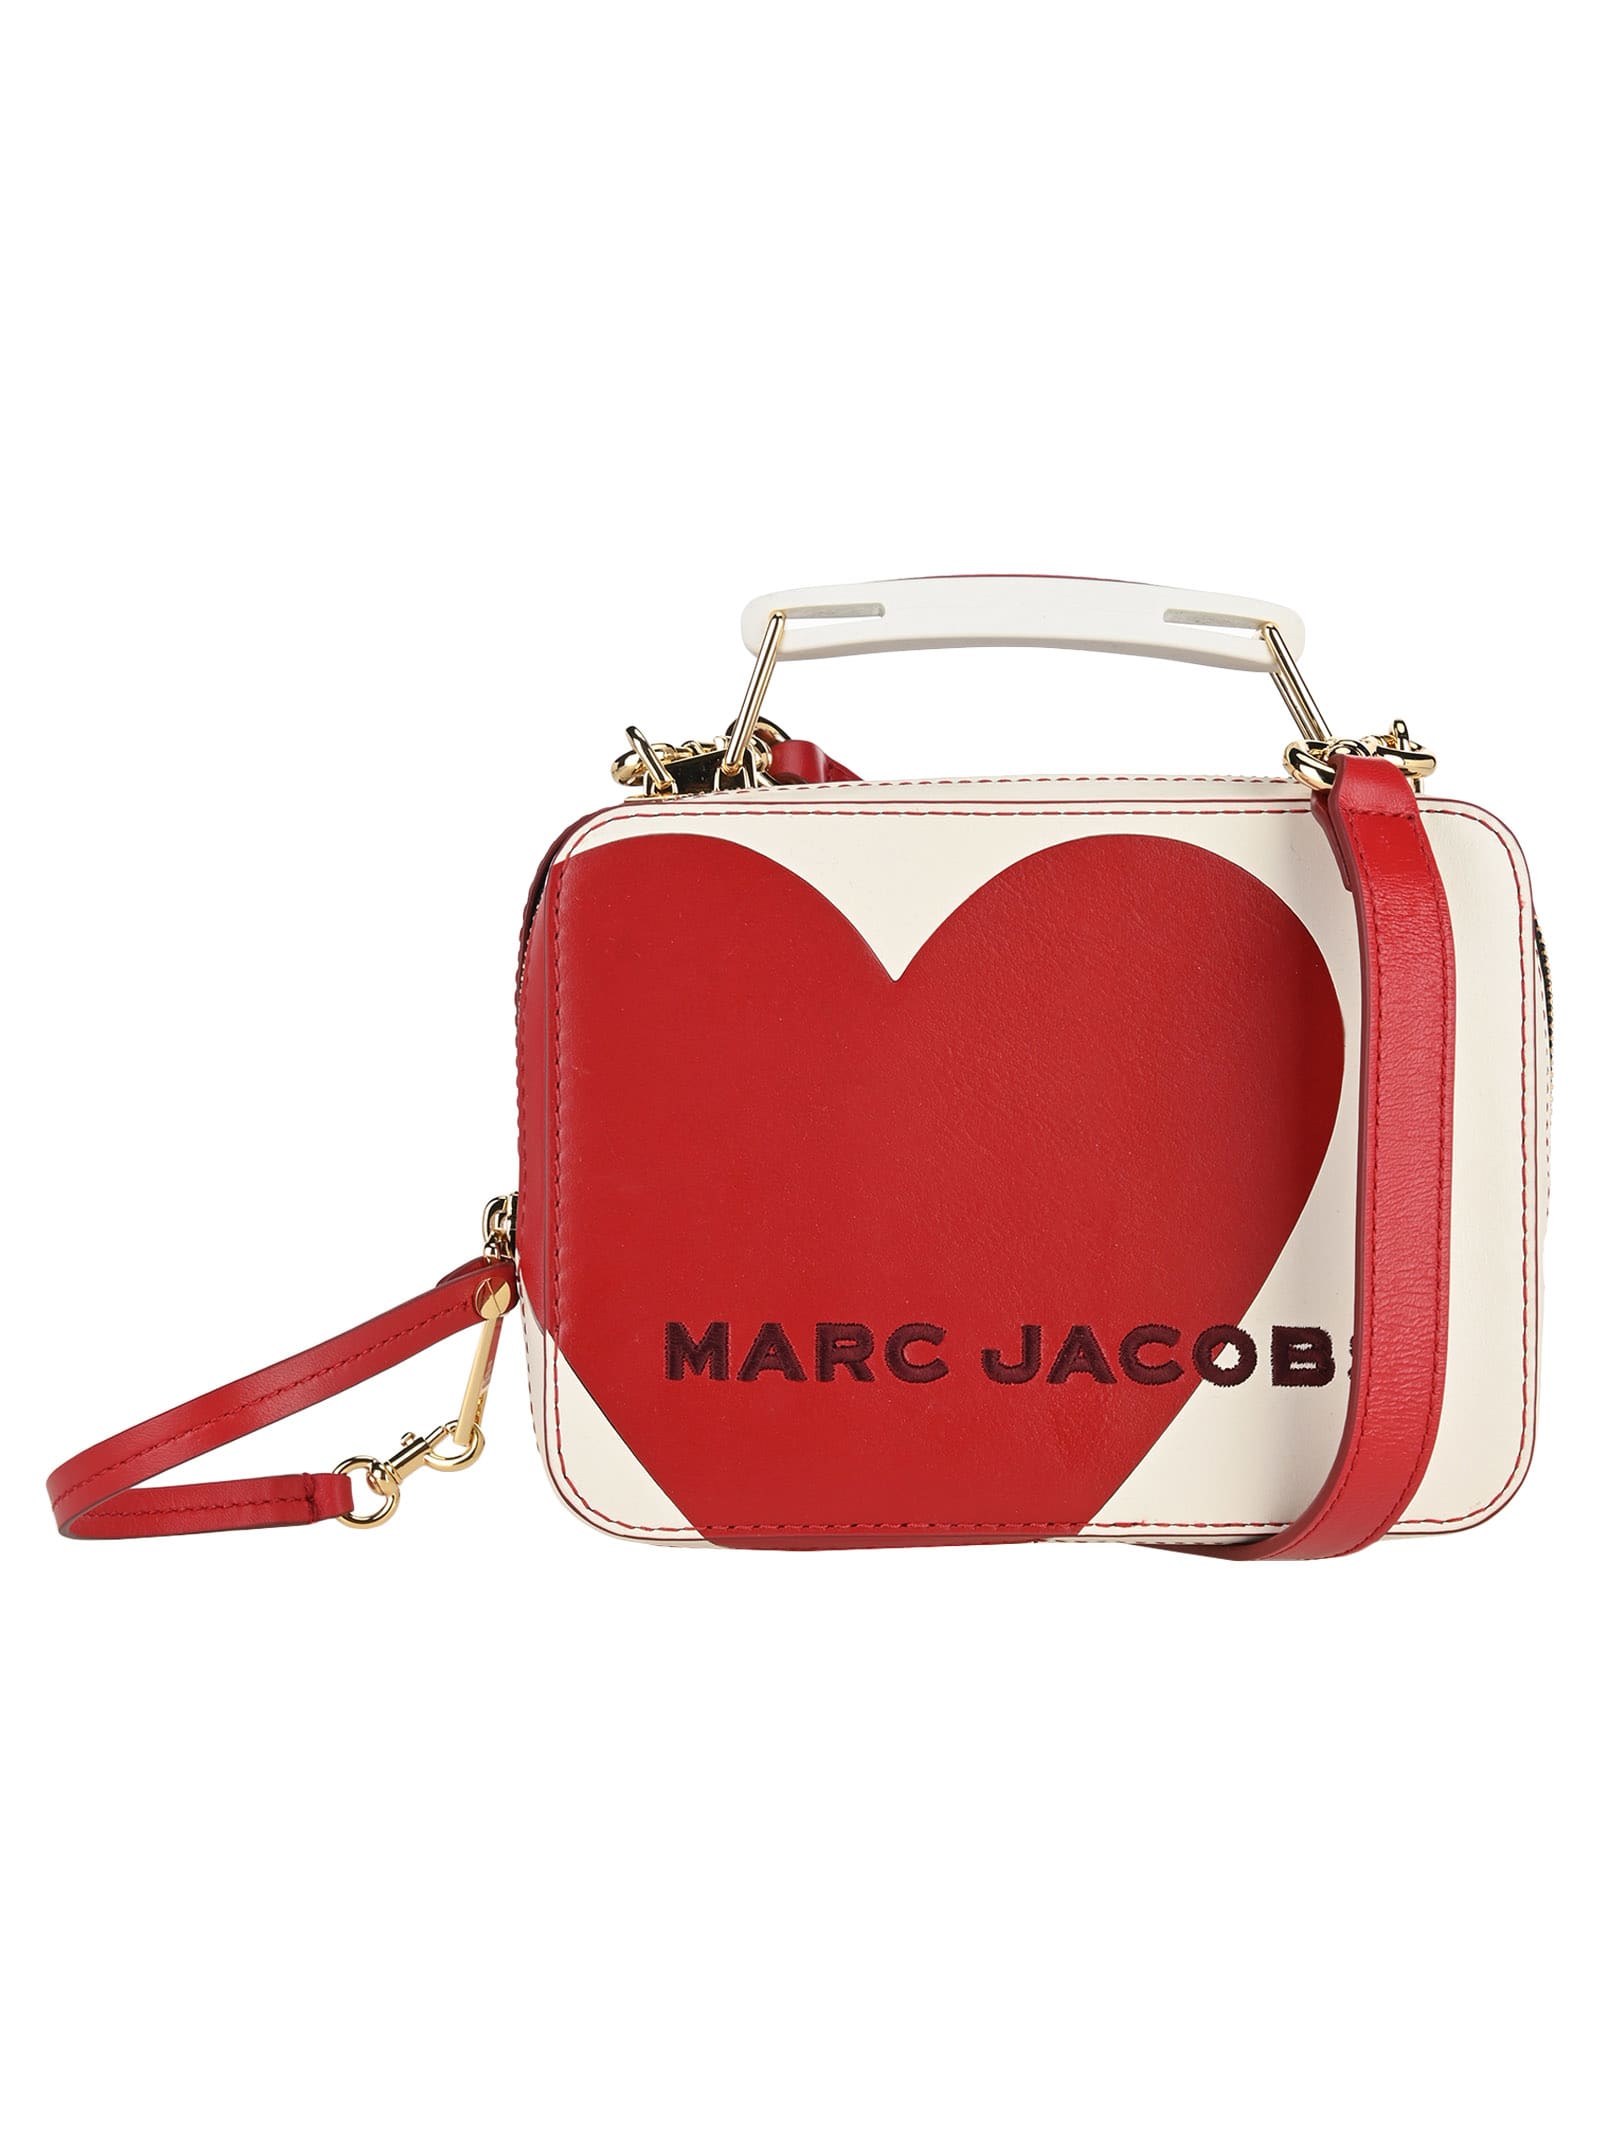 MARC JACOBS THE HEART MINI BOX BAG,11273577